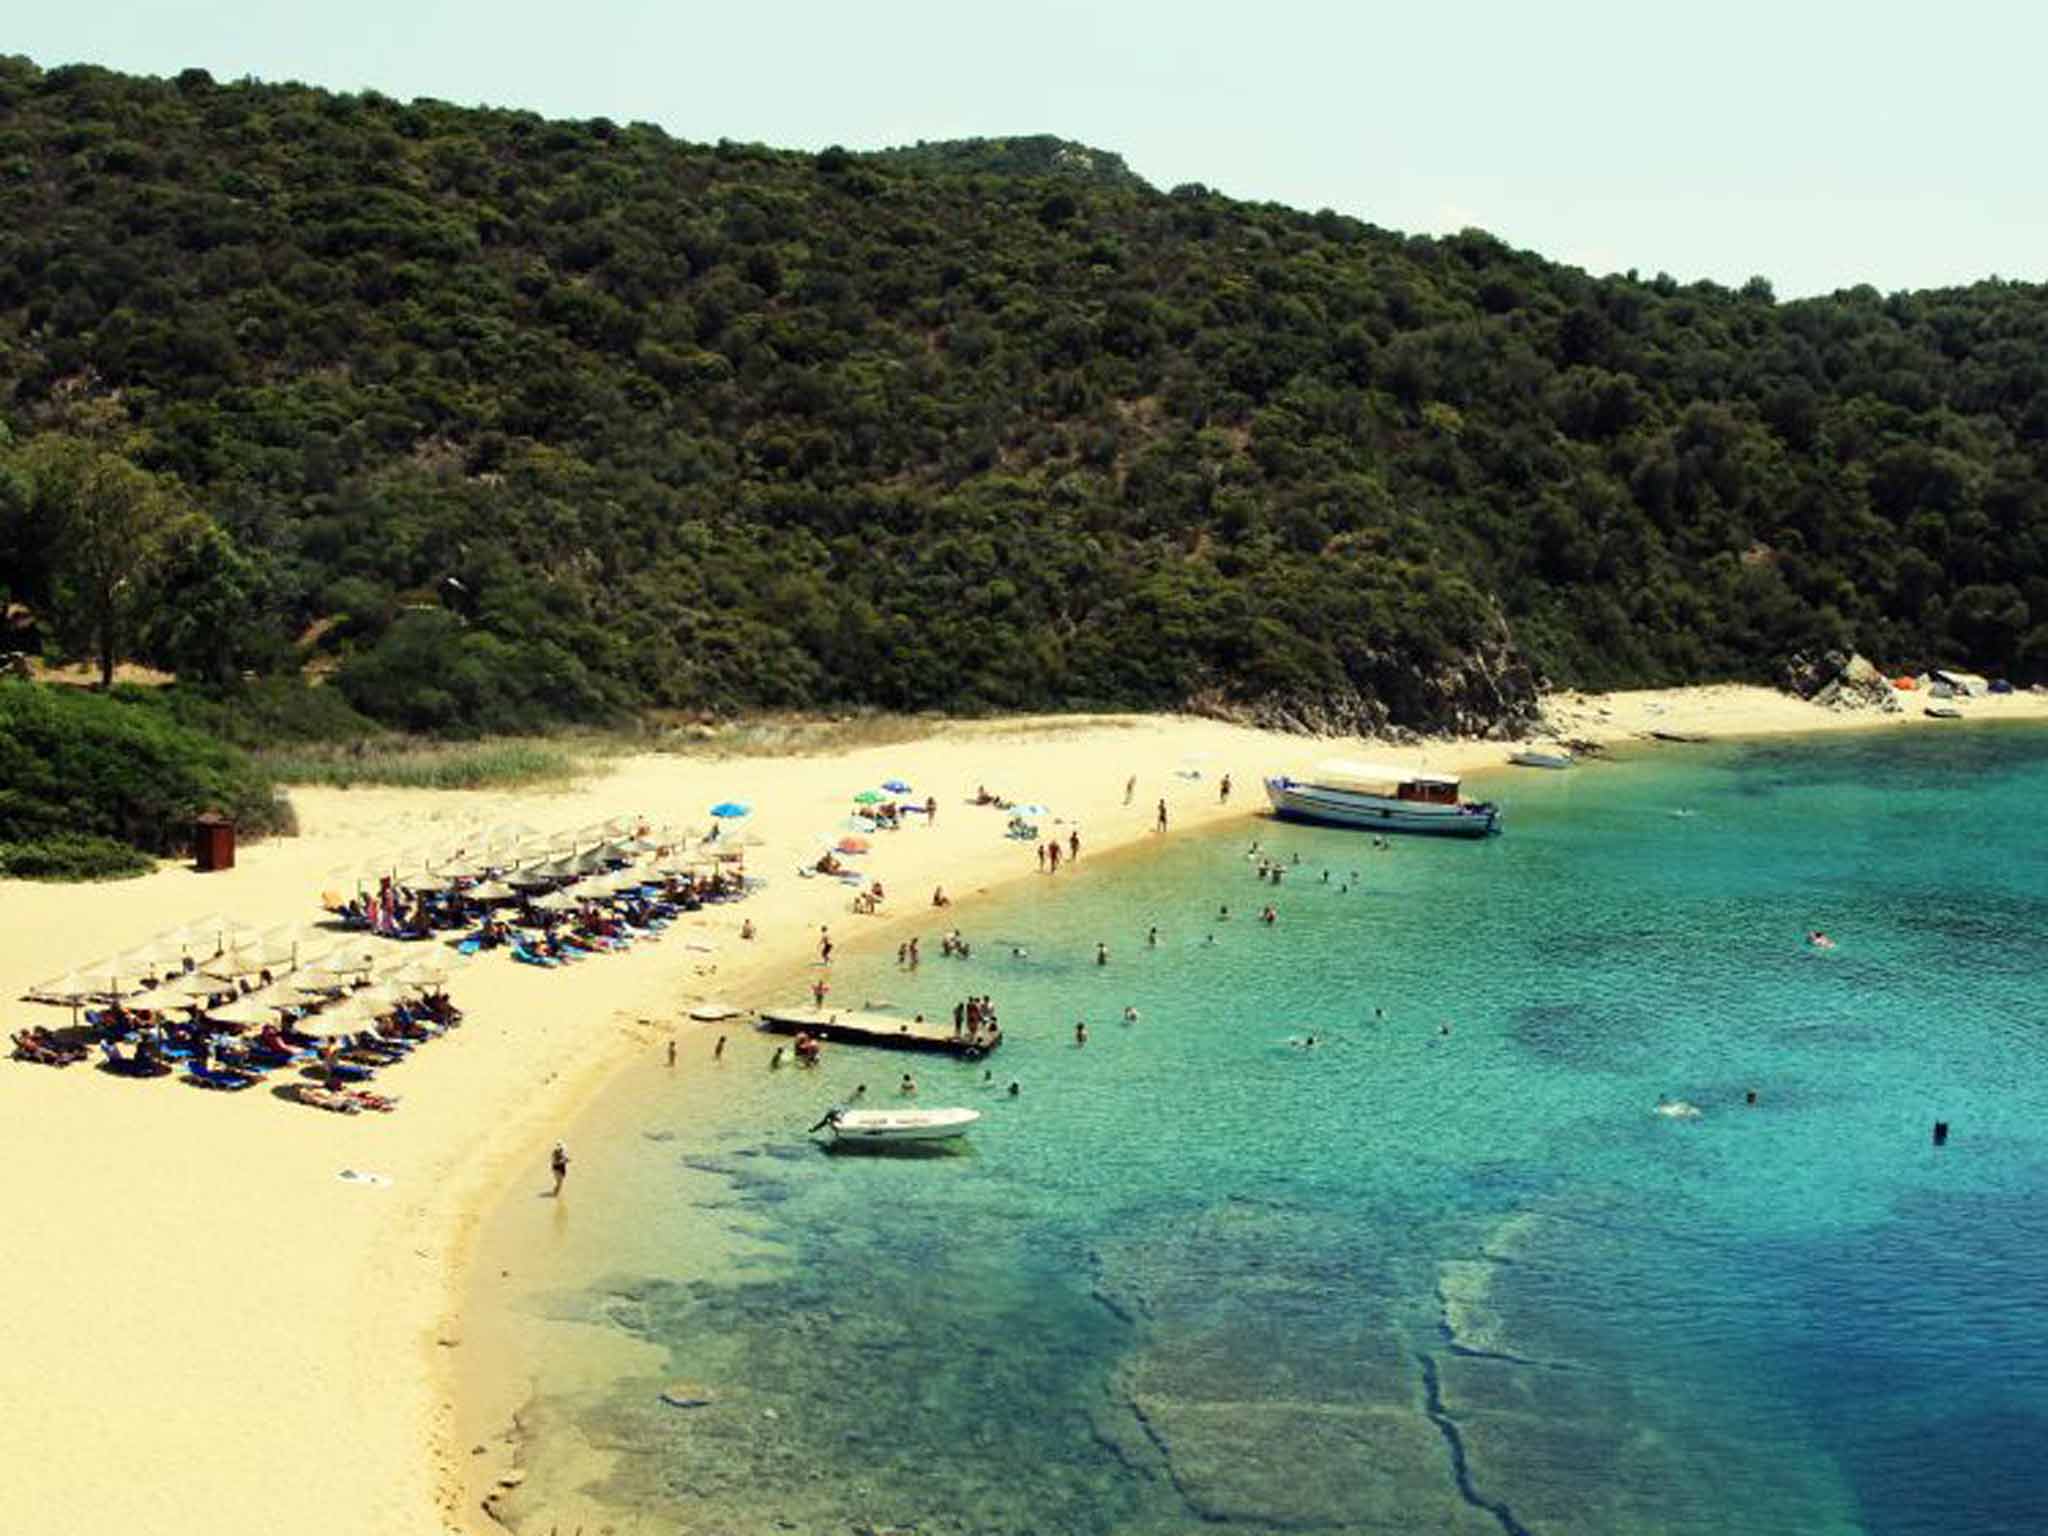 Greek week: Escape to the island of Ammouliani